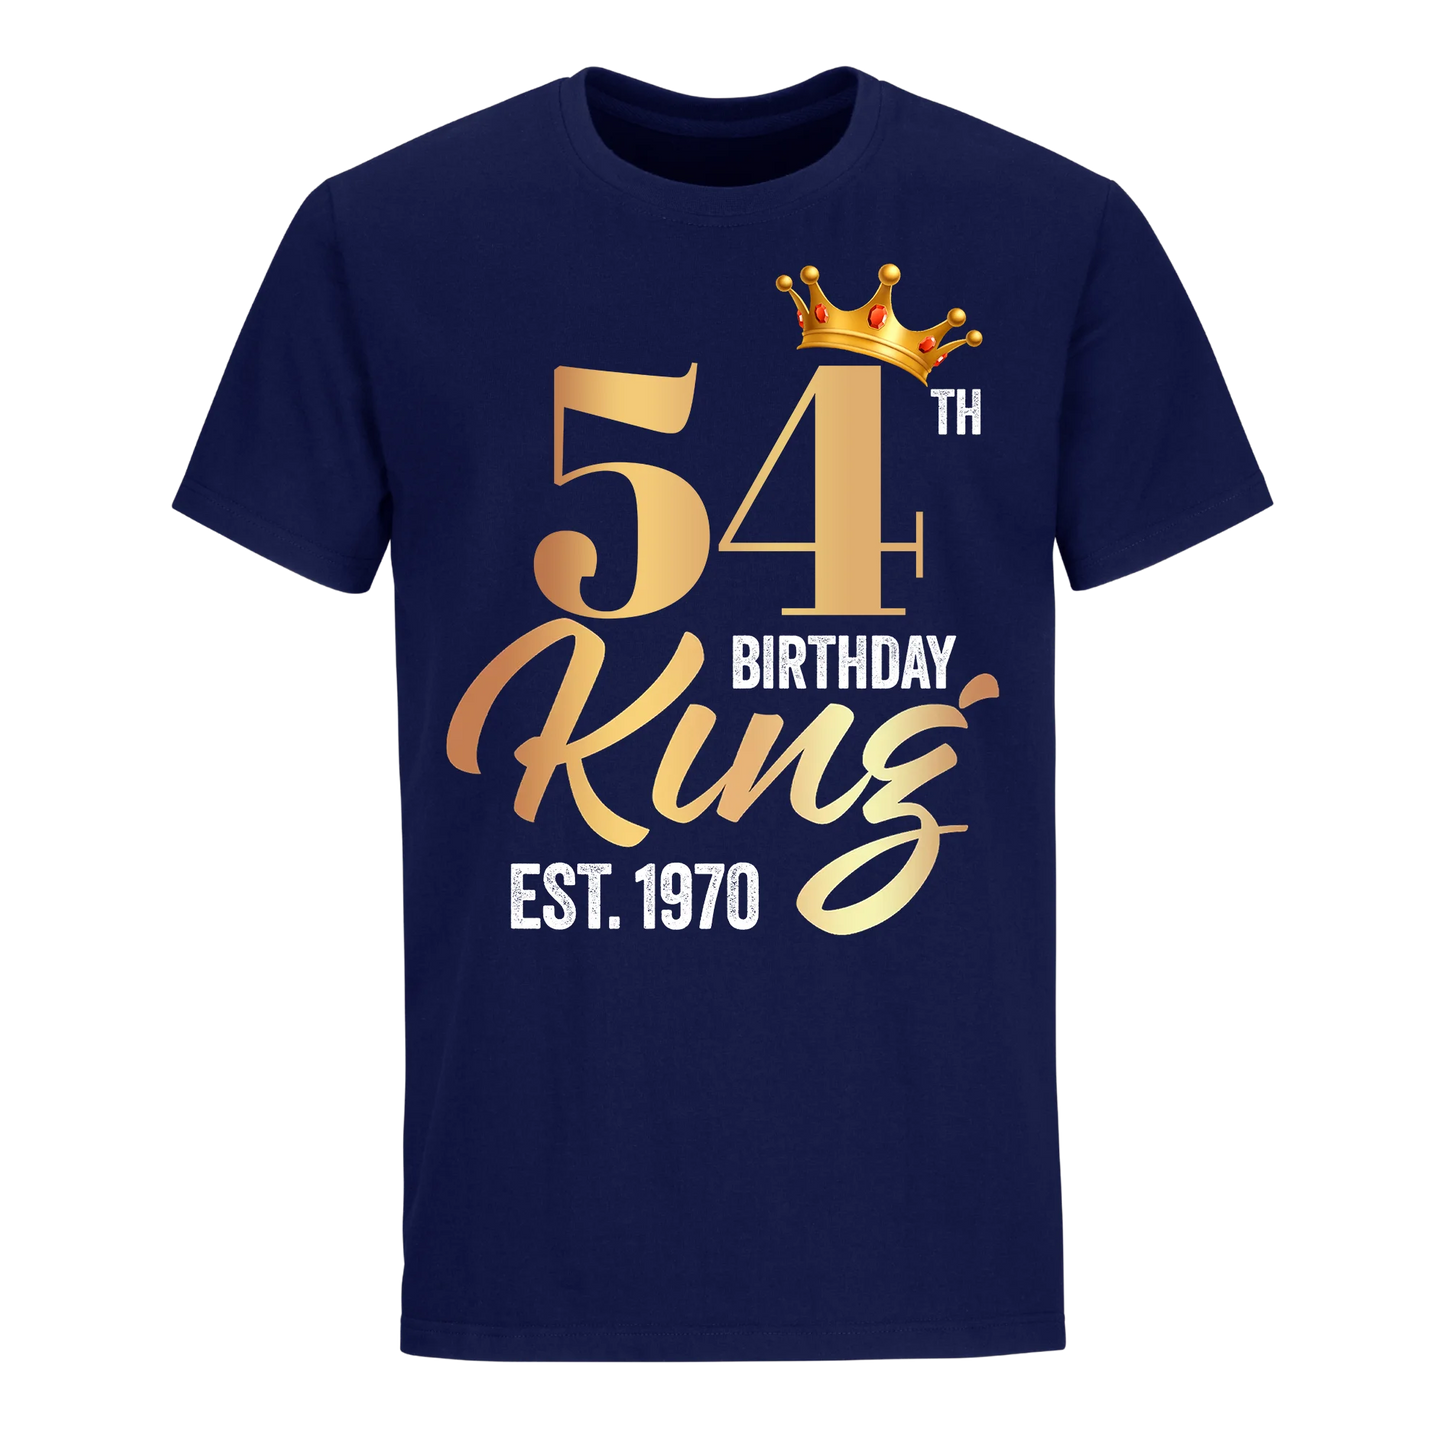 54TH KING BIRTHDAY EST. 1970 UNISEX SHIRT